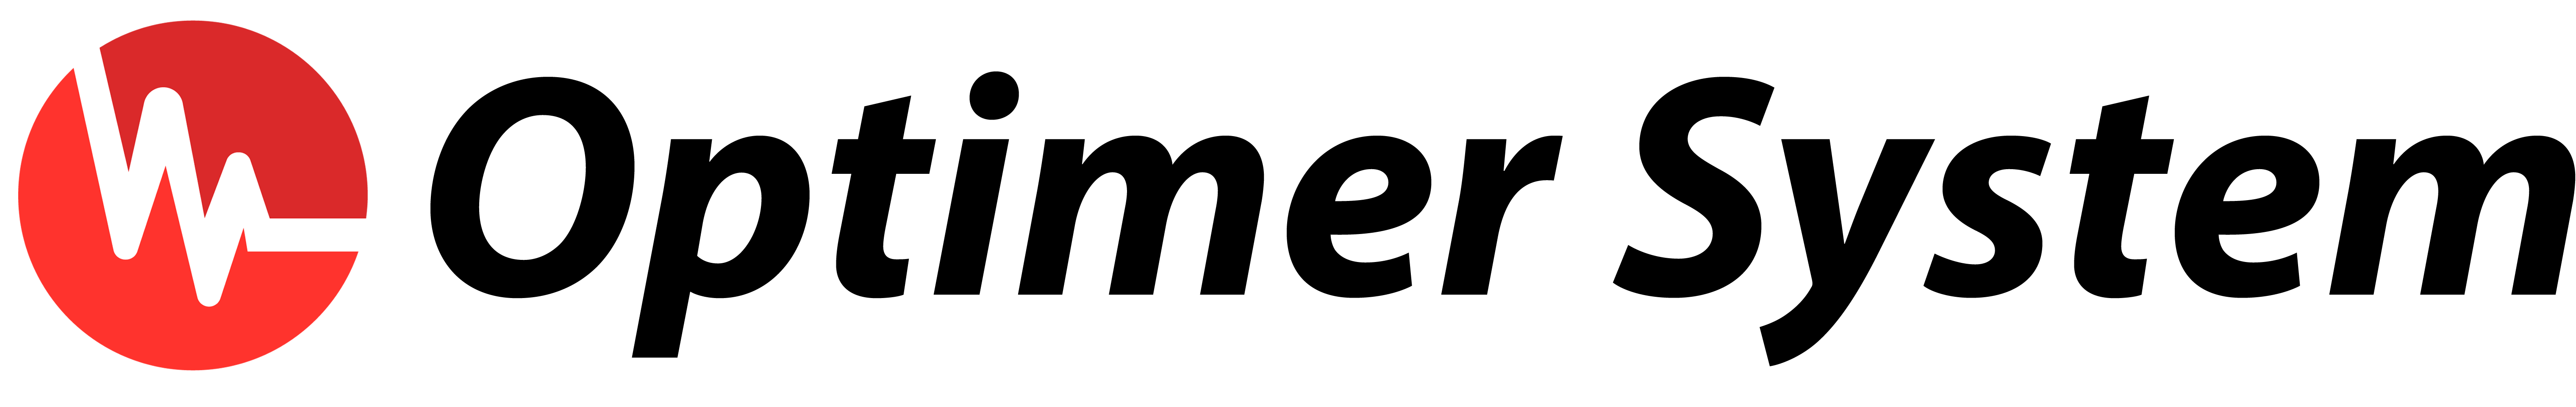 Optimer-System-logo